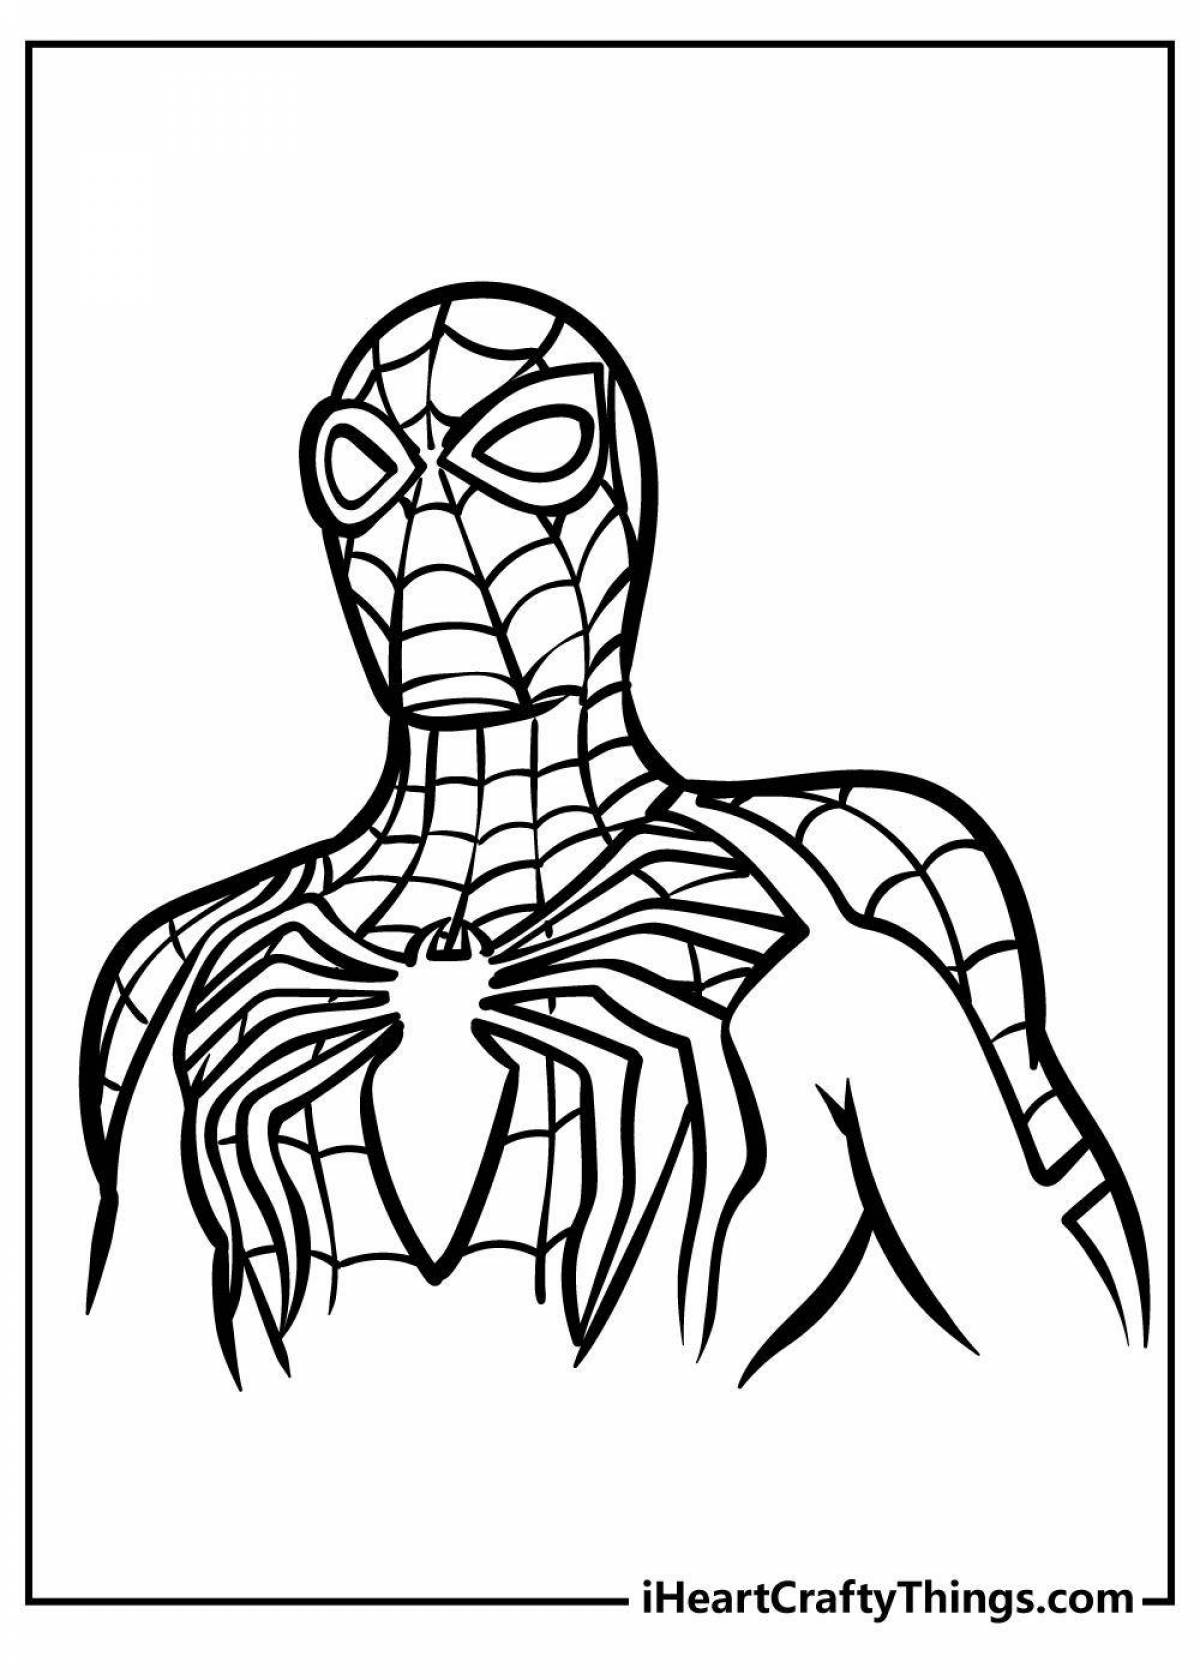 Забавная страница раскраски лица человека-паука